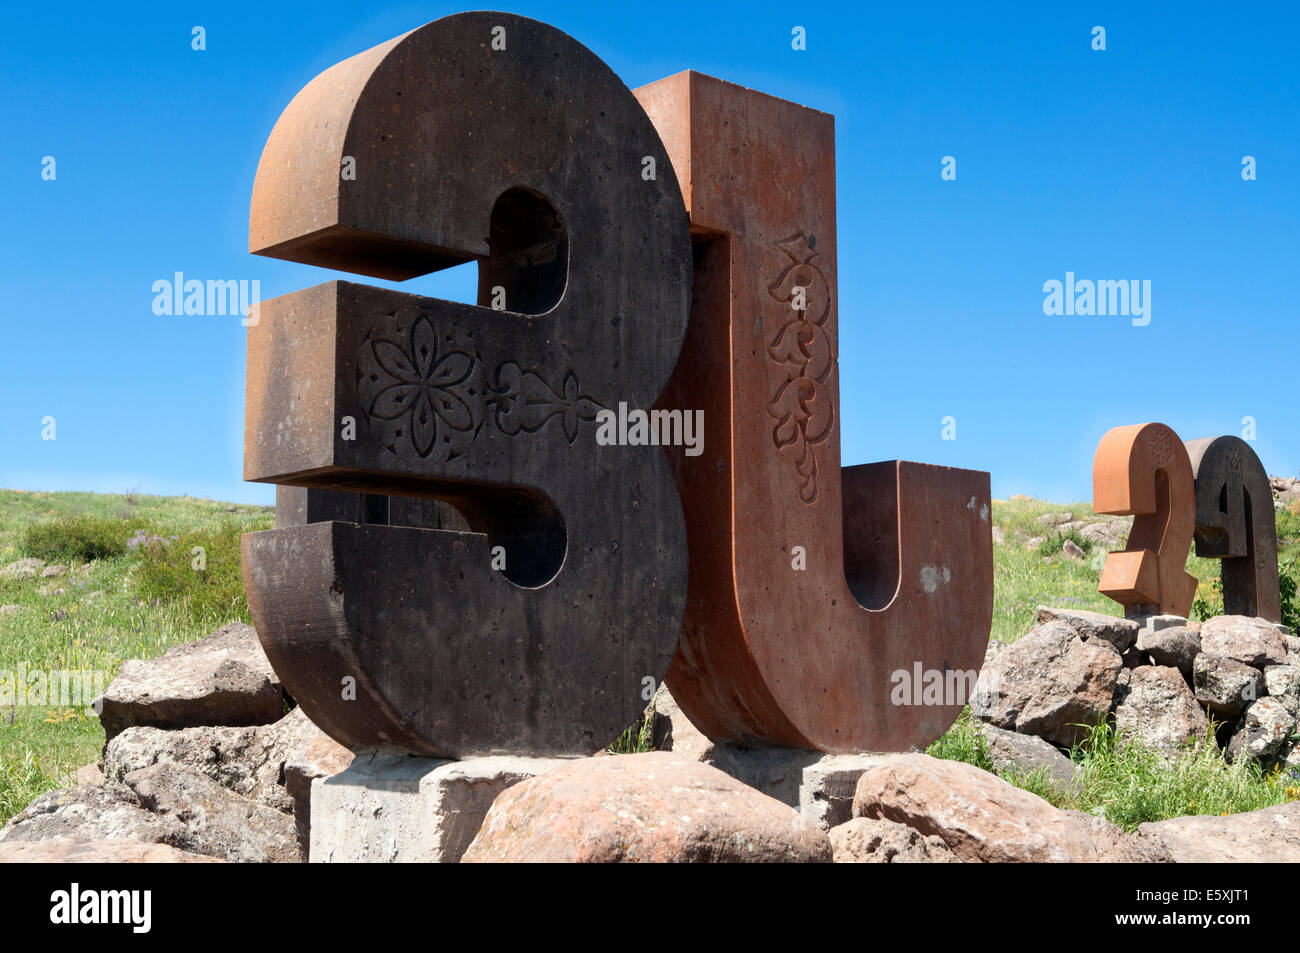 Armenian alphabet monument with giant carved letters, Artashavan village, Armenia Stock Photo